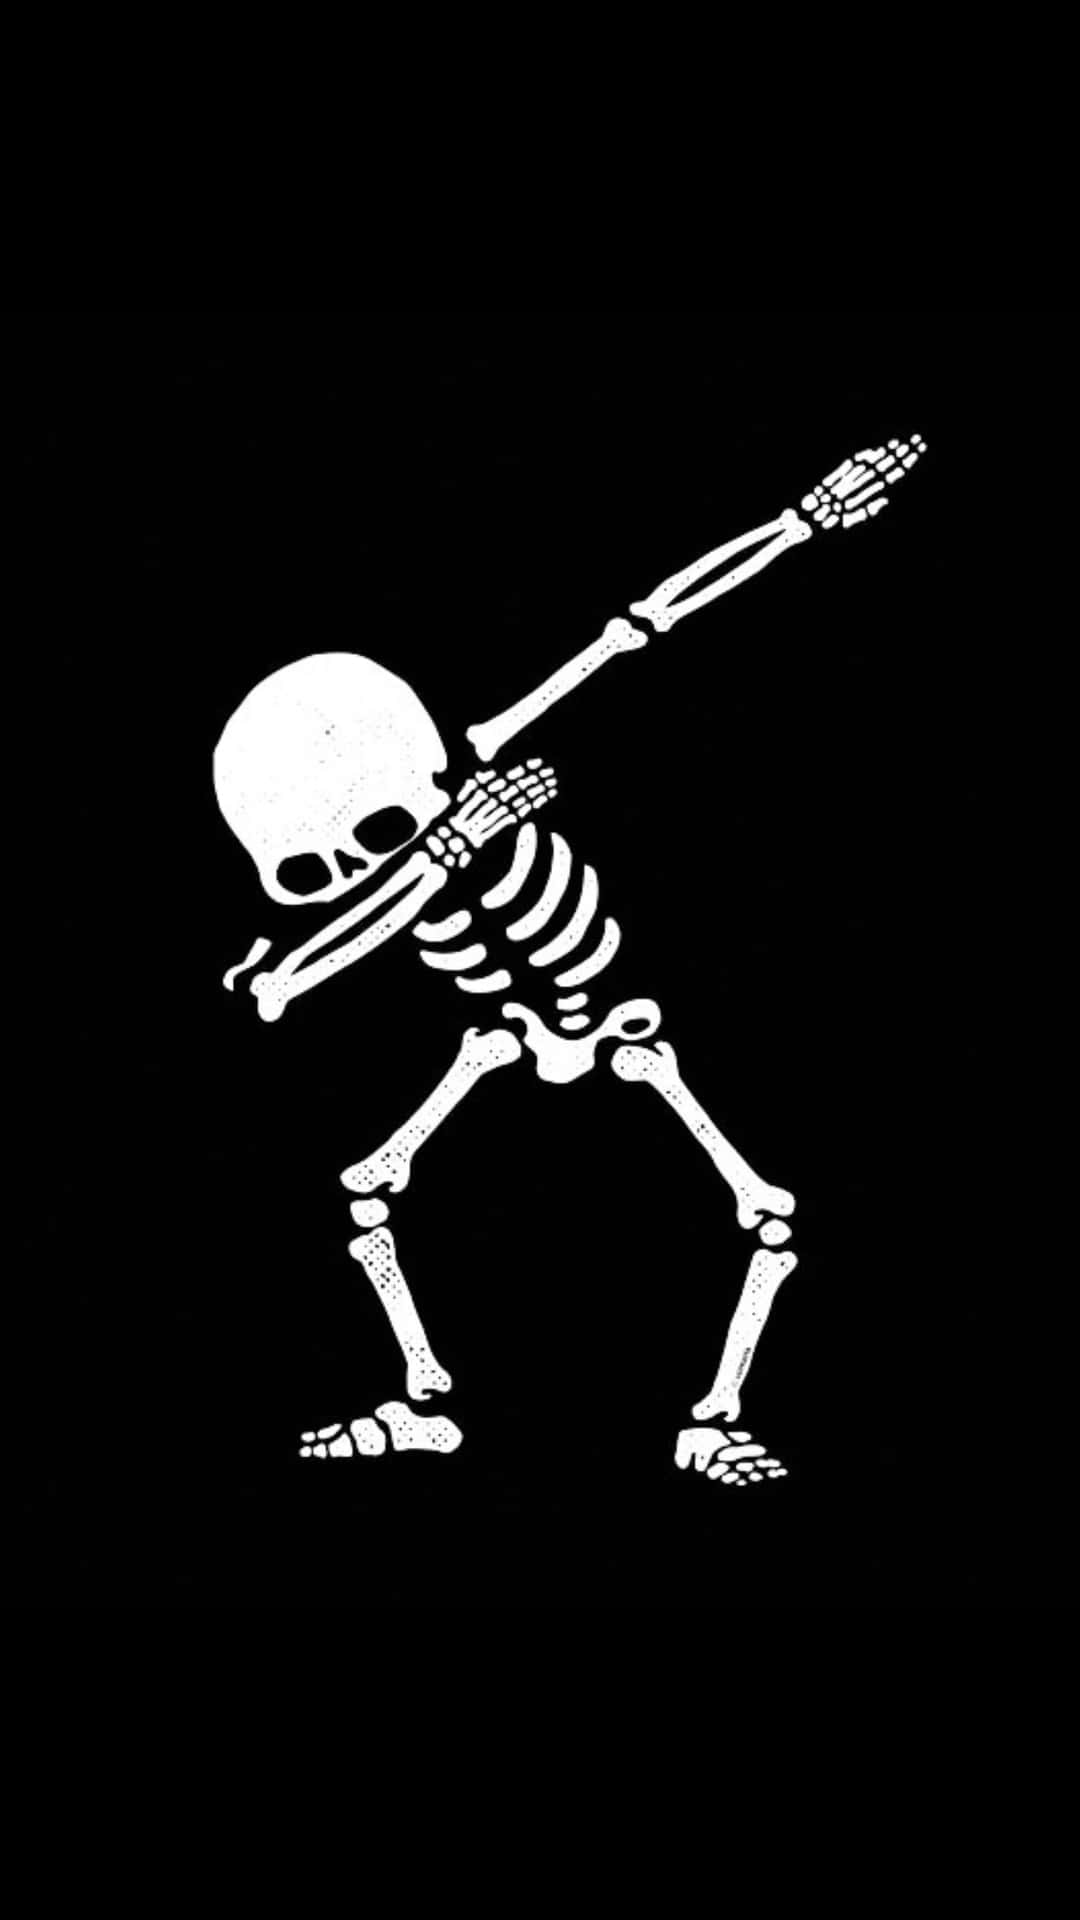 Funny Skeleton Dabbing Art Picture